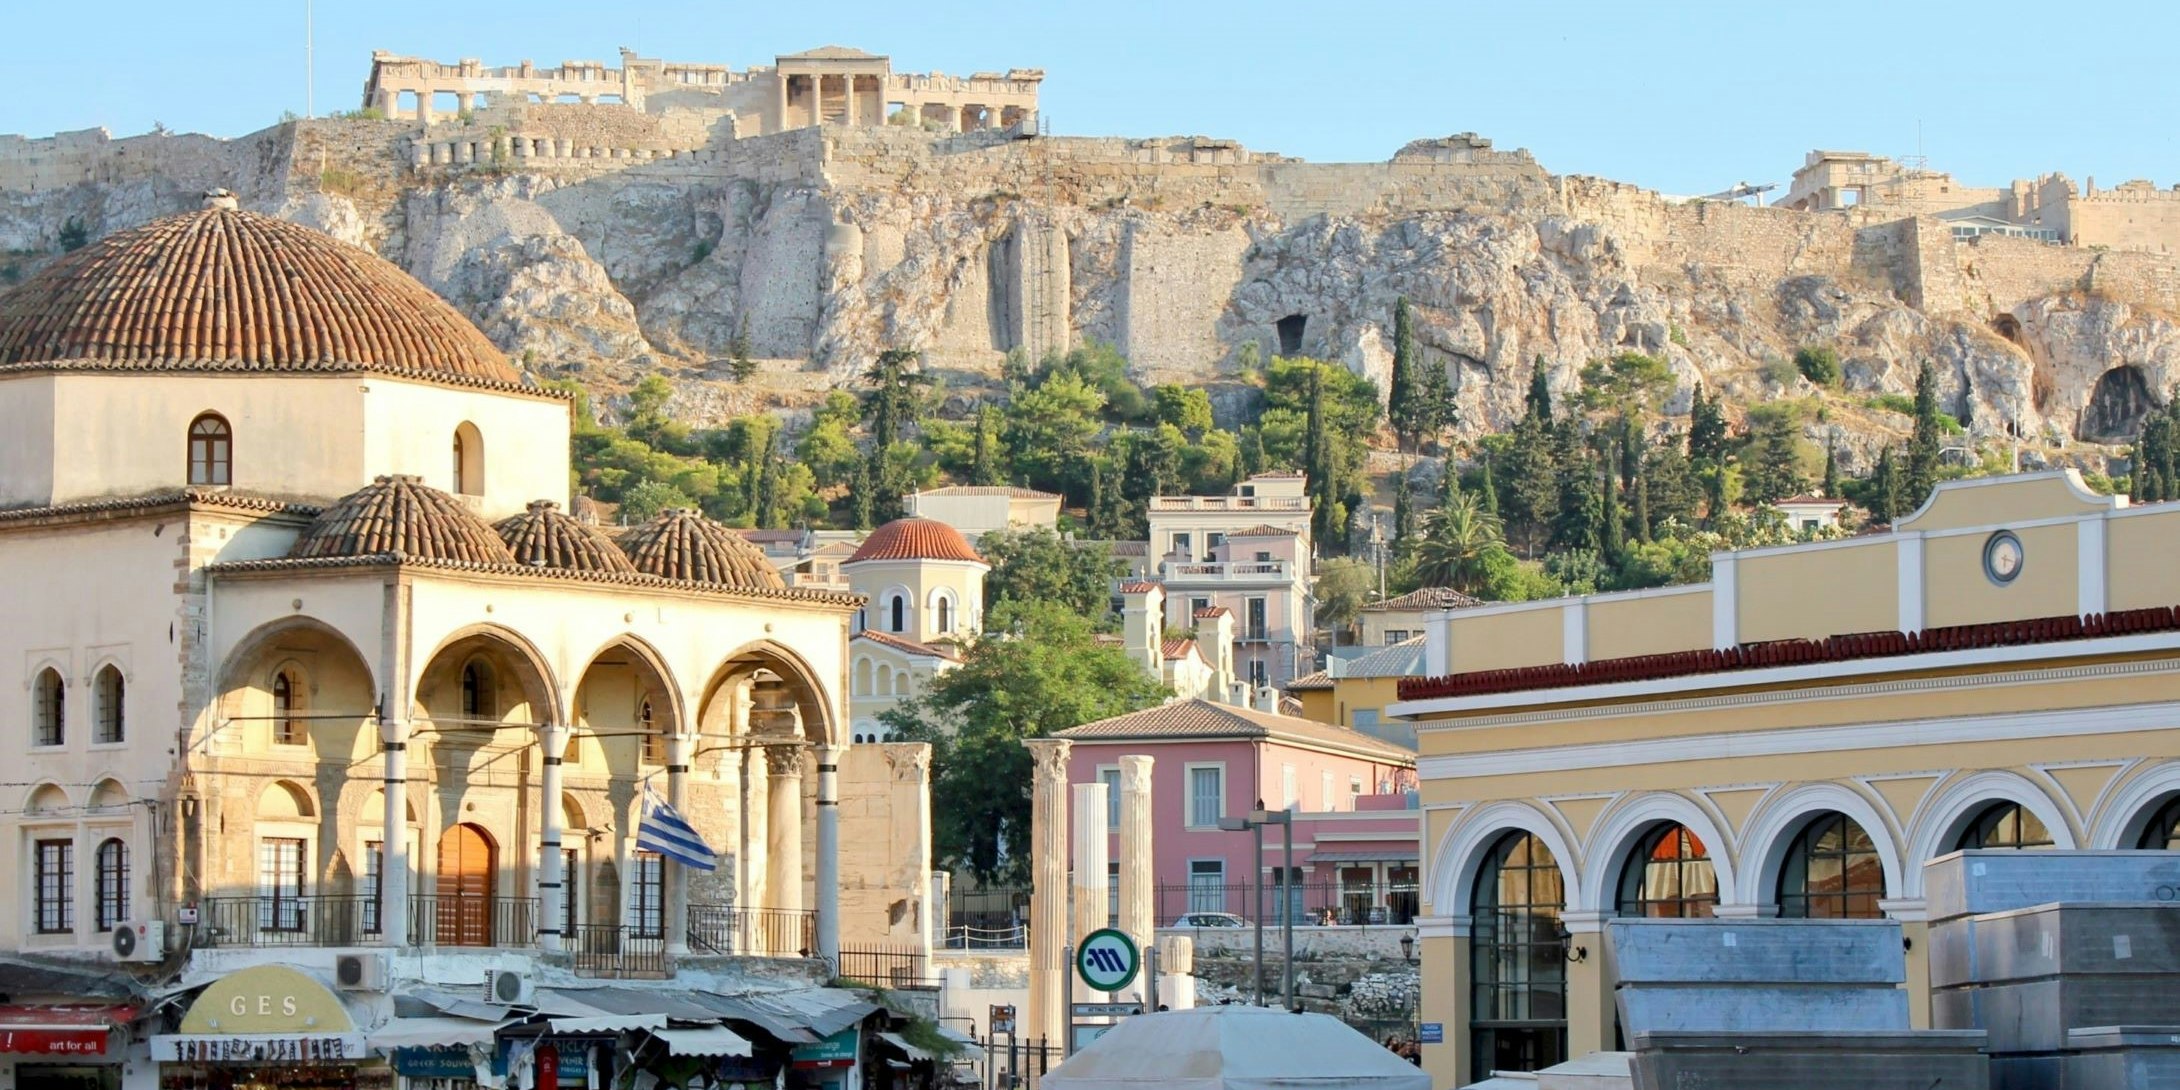 Greece: The Parthenon and the Peloponnesian Peninsula